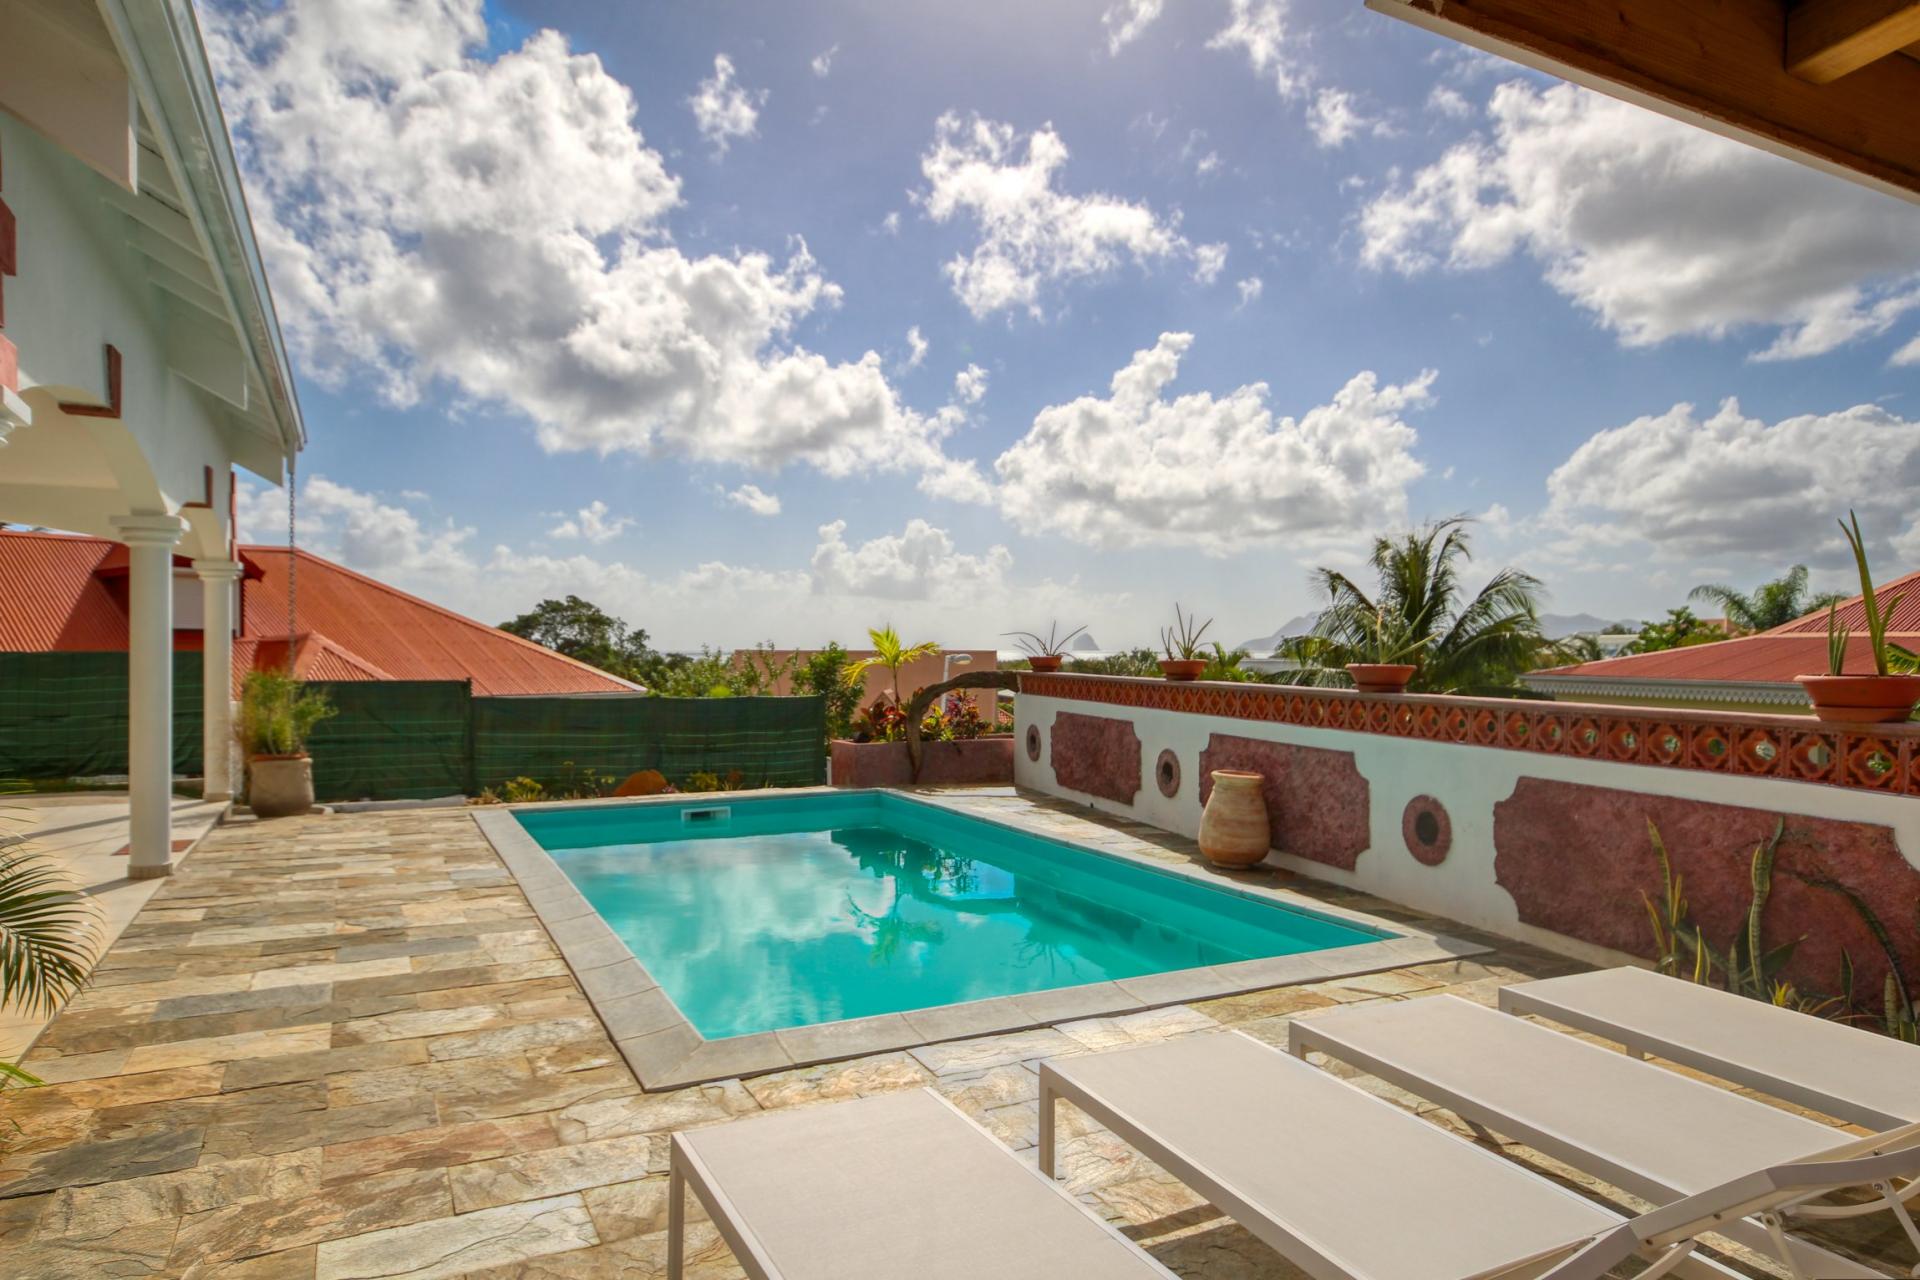 Location maison luxe Martinique - Piscine et vue mer